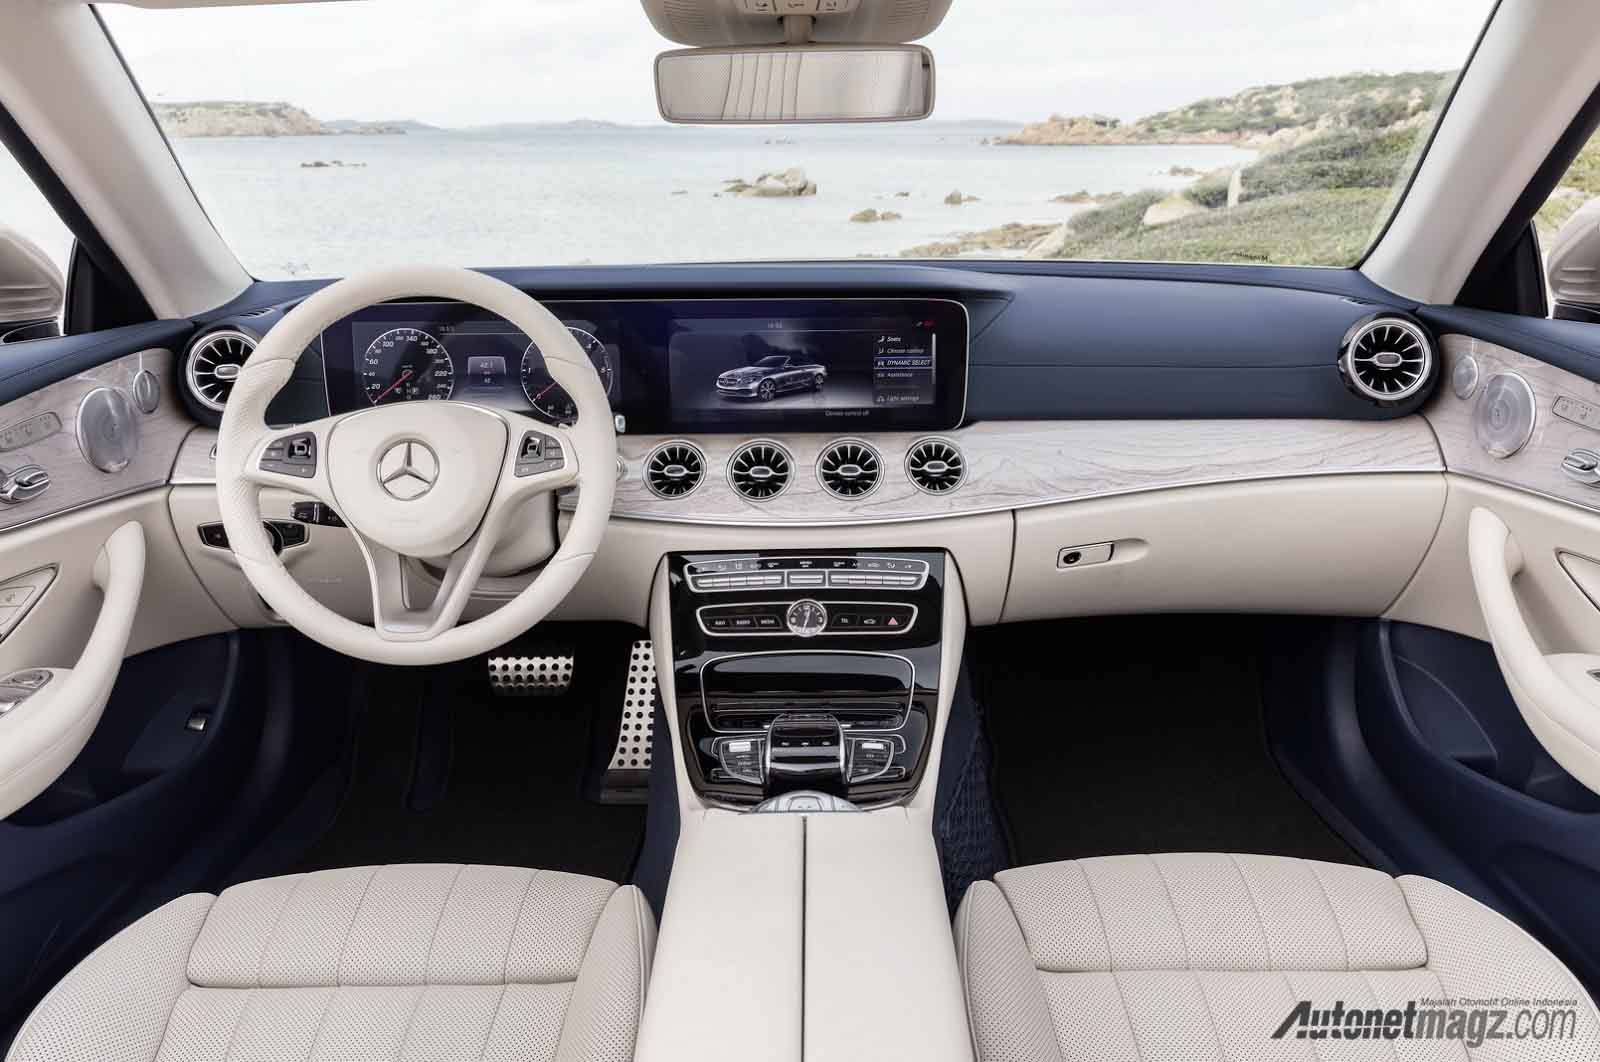 Berita, interior Mercedes Benz E Class Cabriolet: Mercedes E-Class Cabriolet Terbaru Dirilis di Jerman, Edisi Spesial 25 Tahun